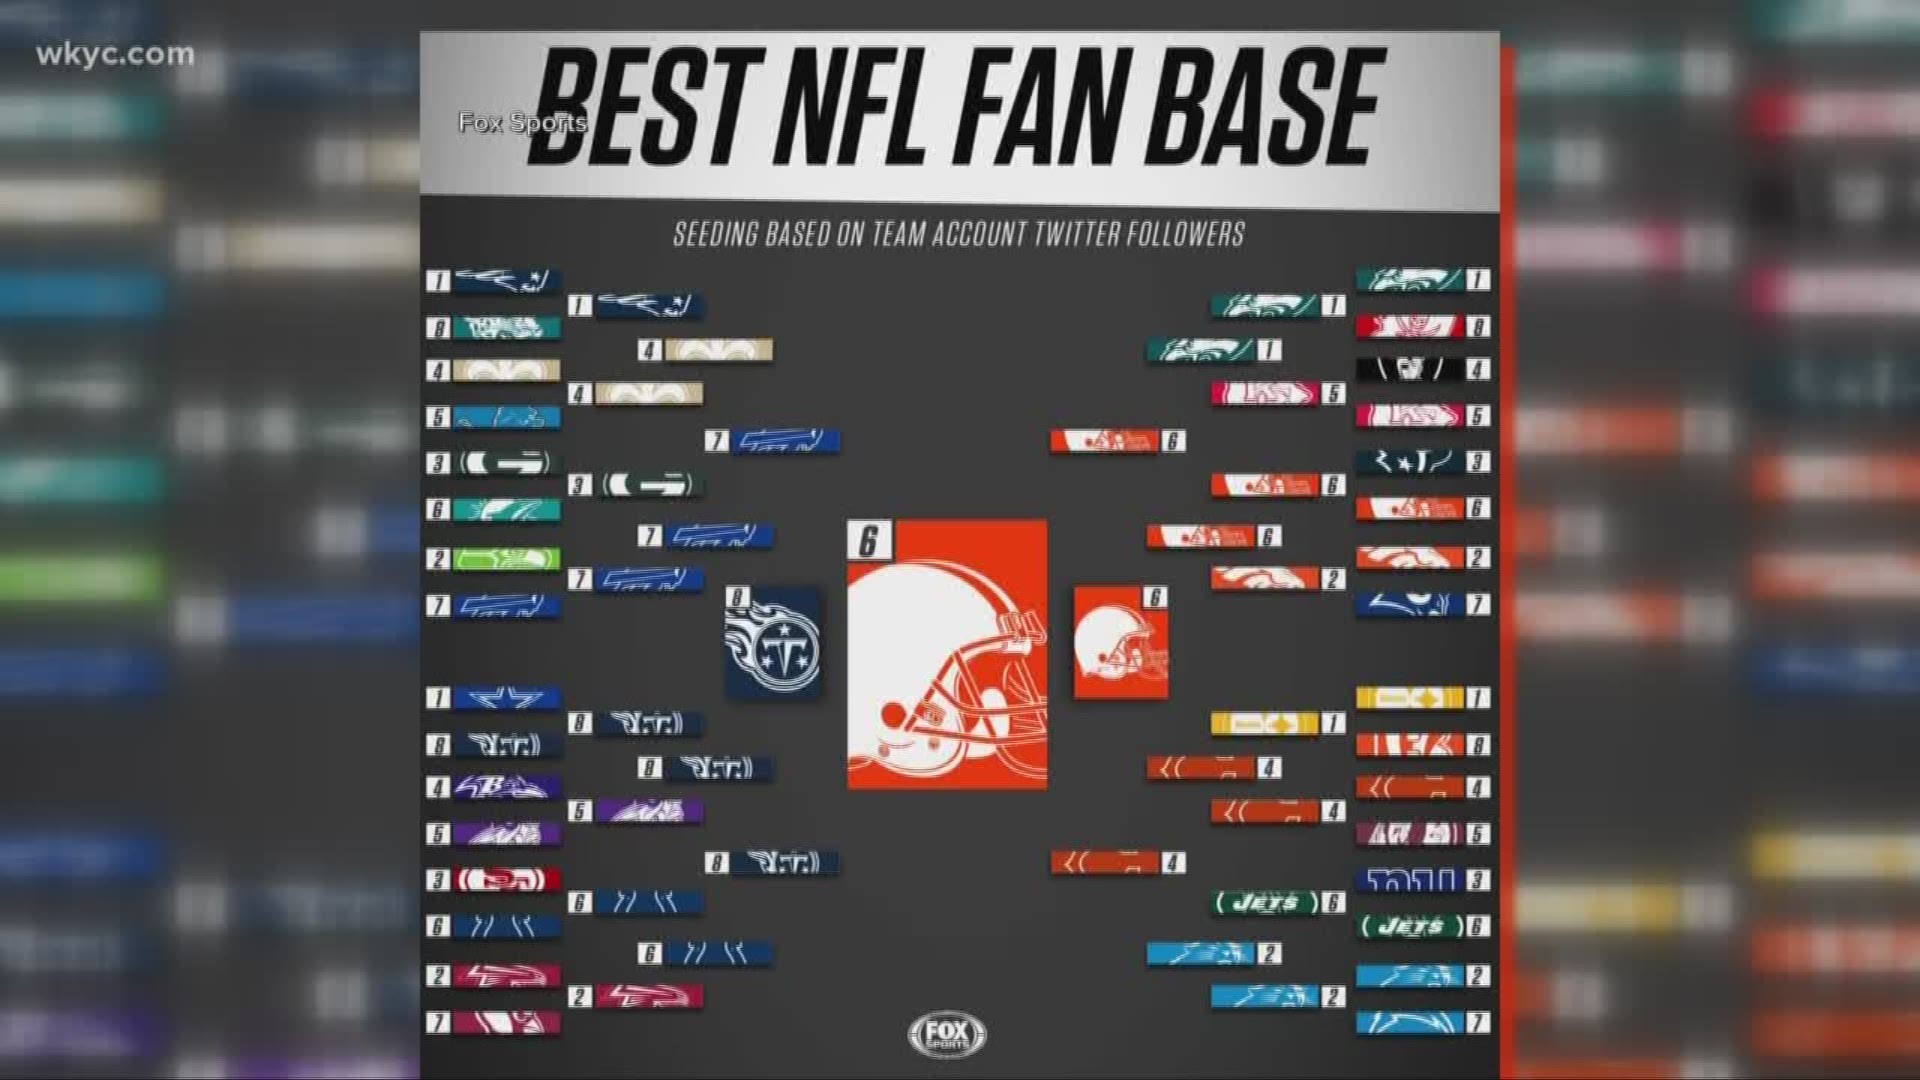 Cleveland Browns voted NFL's best fan base